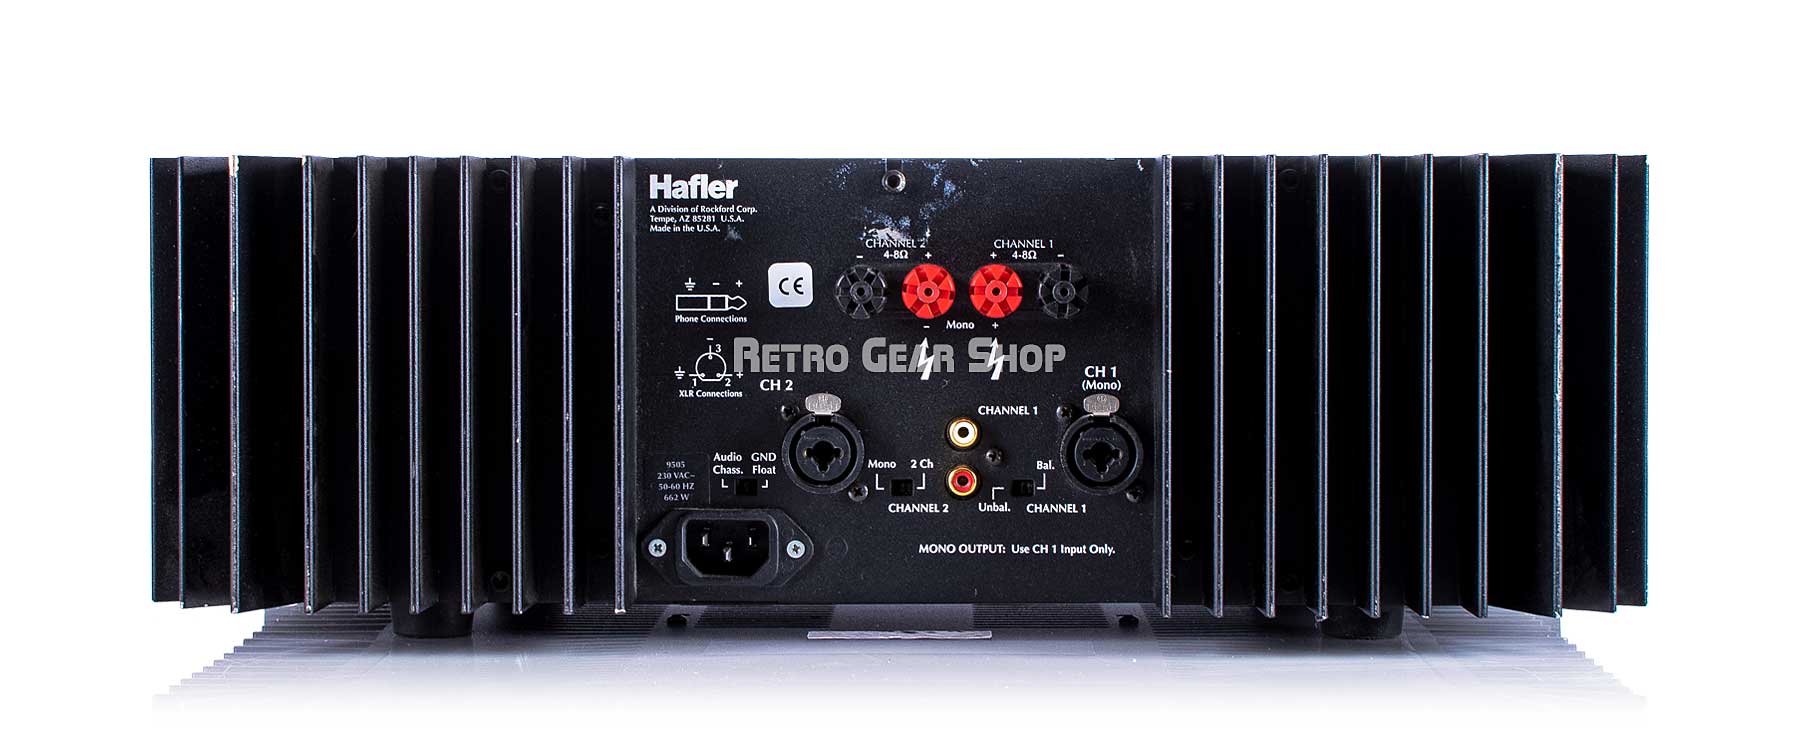 Hafler Trans-nova Series 9505 Stereo Power Amp Rear